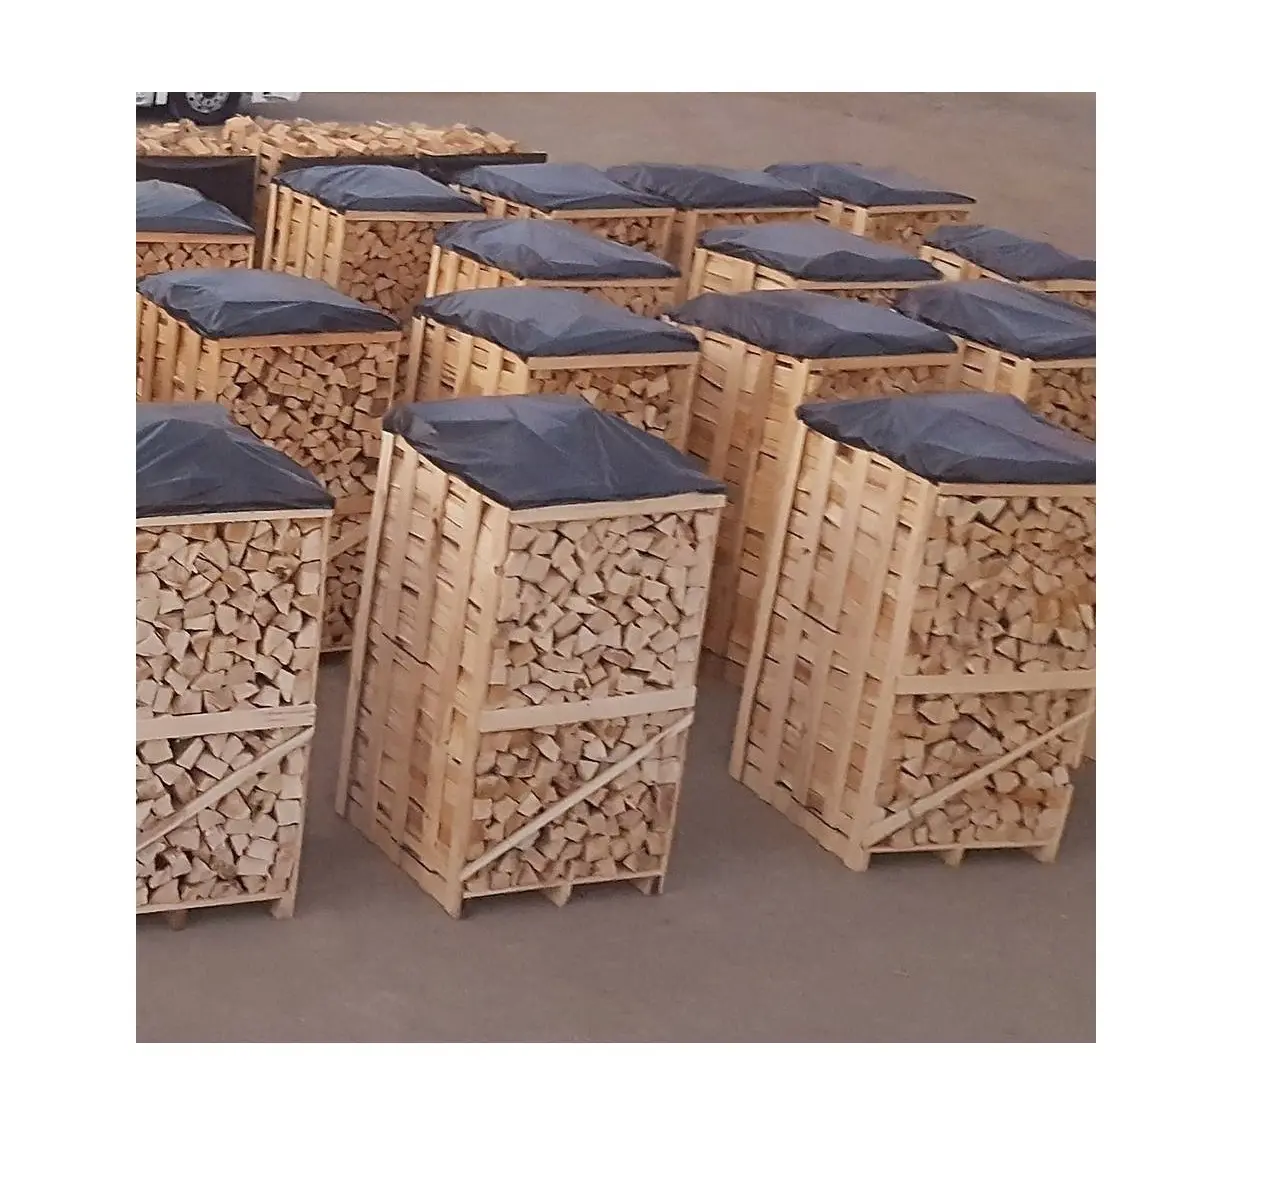 Wholesale Supplier of Kiln Dried Split Firewood / Beech Firewood Bulk Quantity Ready For Export